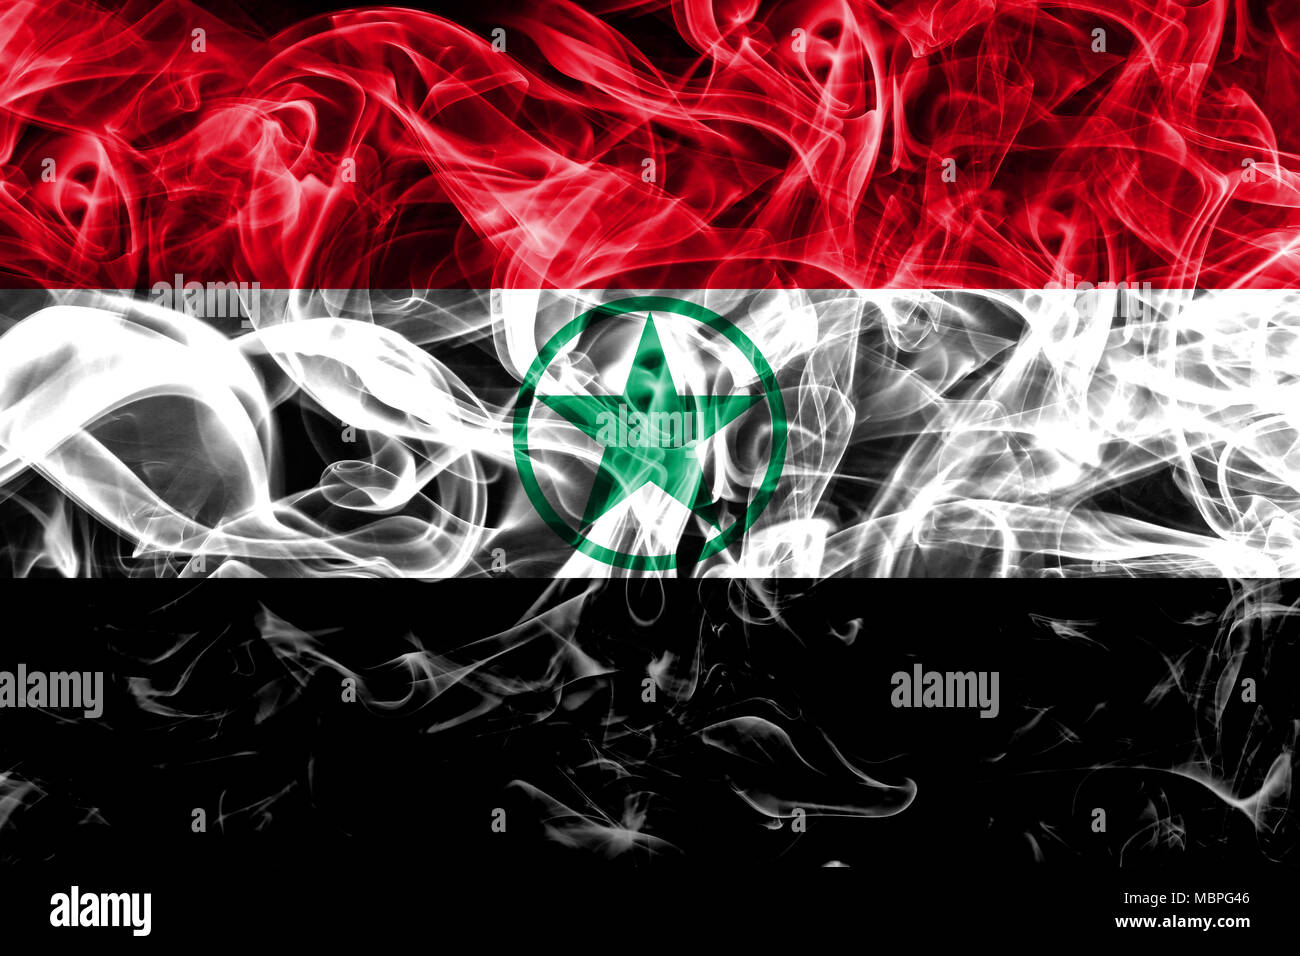 Arabistan rauch Flagge, Iran abhängig Territorium Flagge Stockfoto